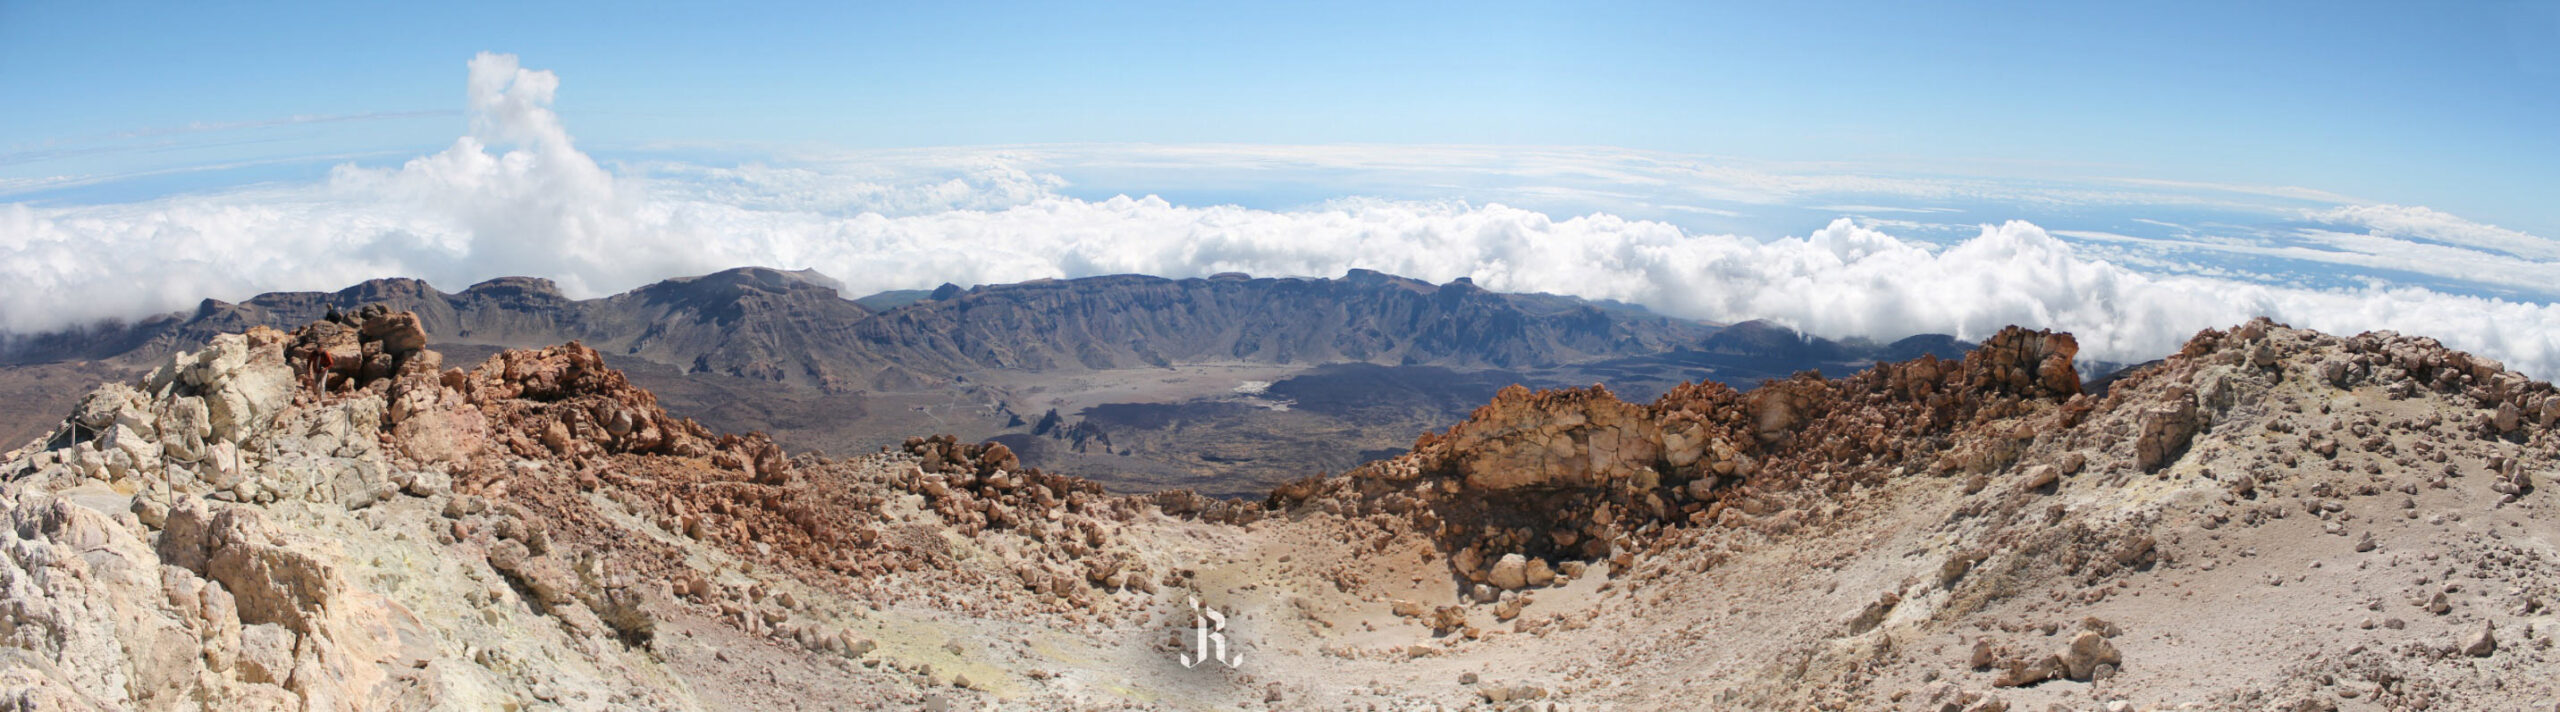 Cima del volcán Teide, Tenerife